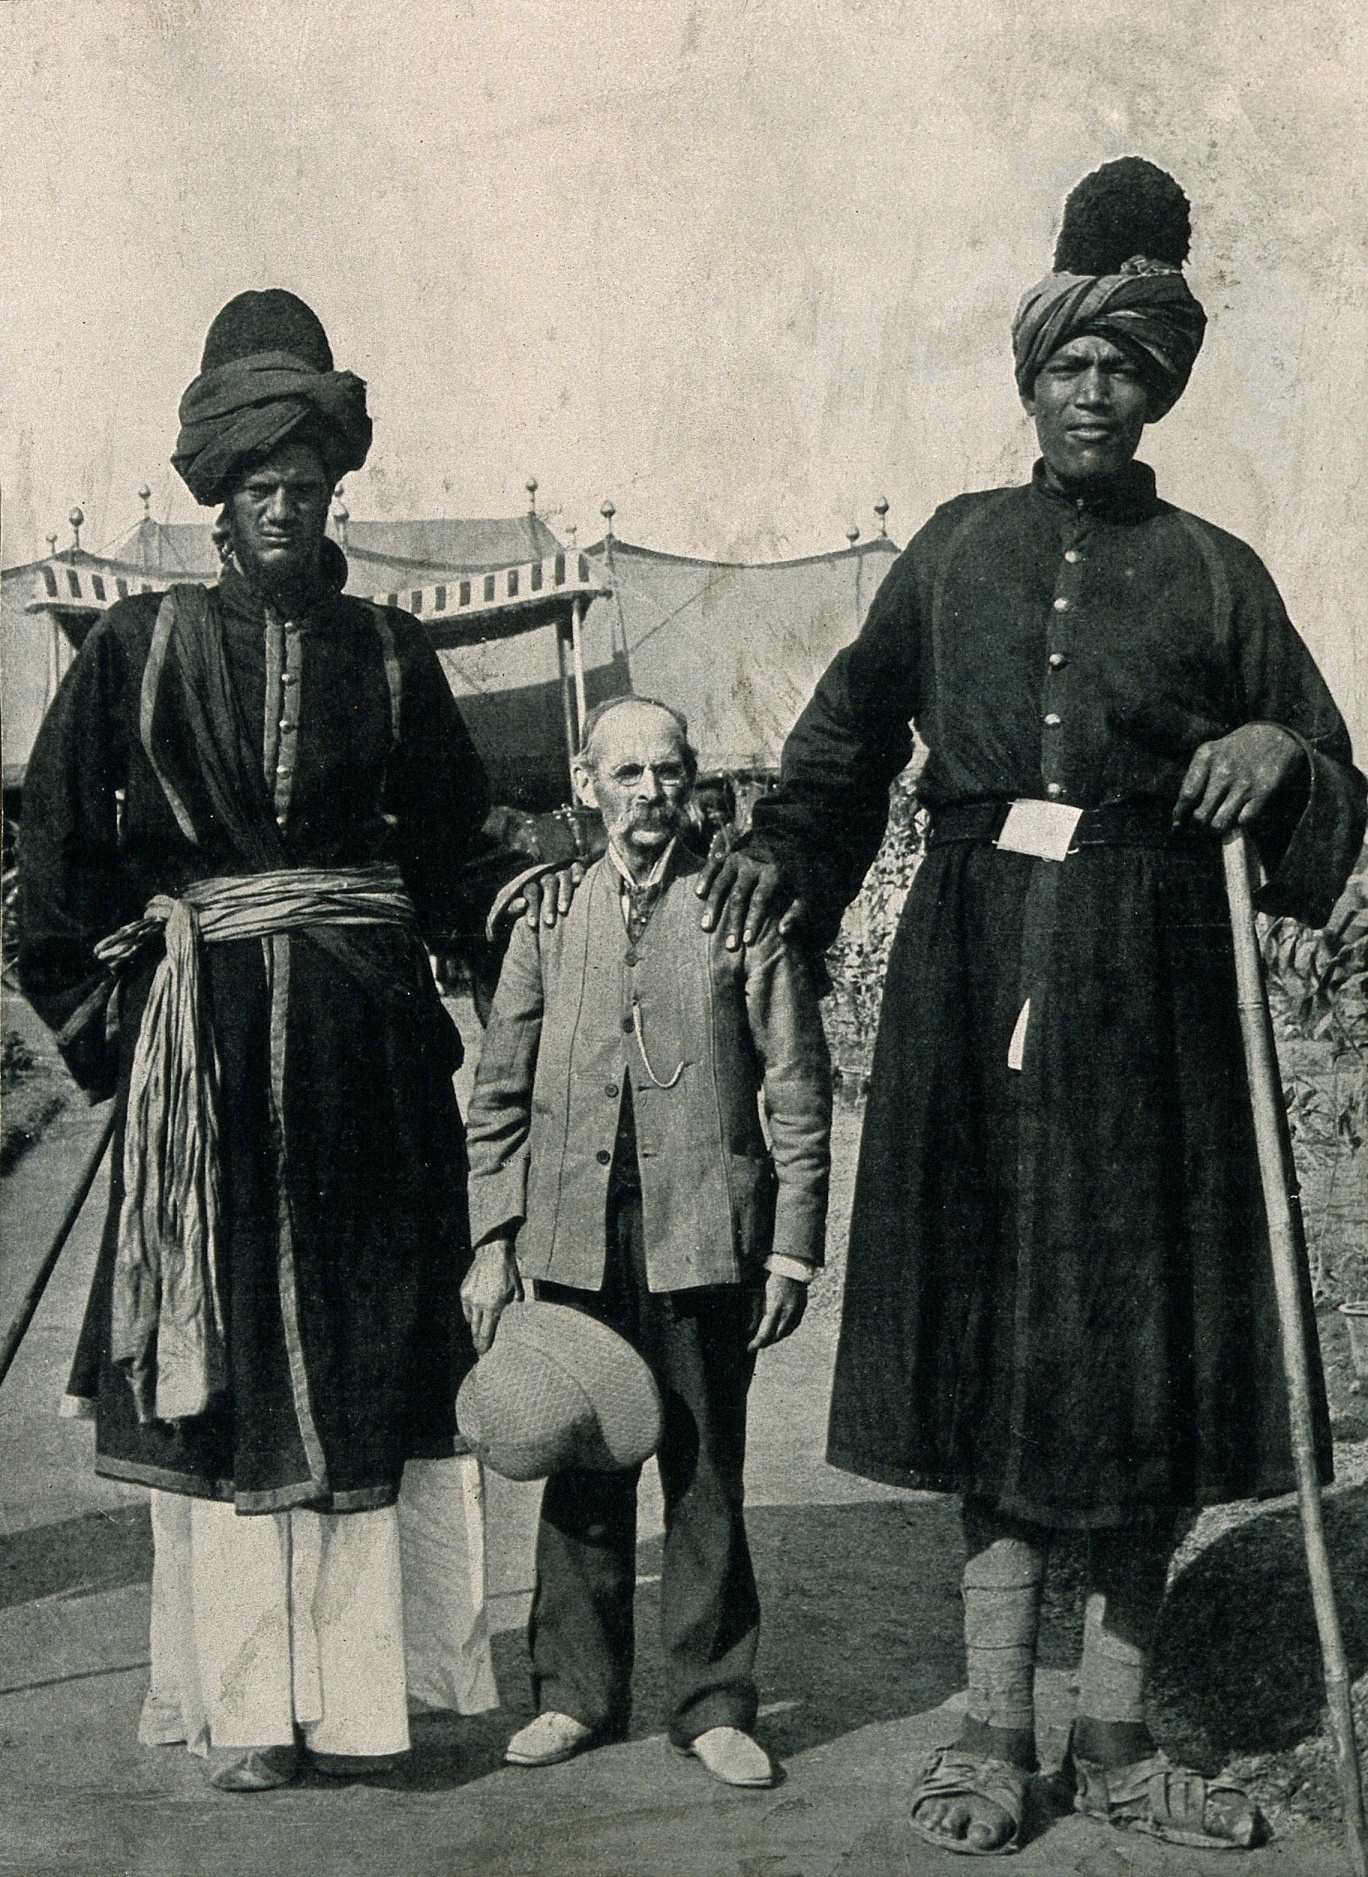 Two Kashmir giants, and their exhibitor, Professor Ricalton